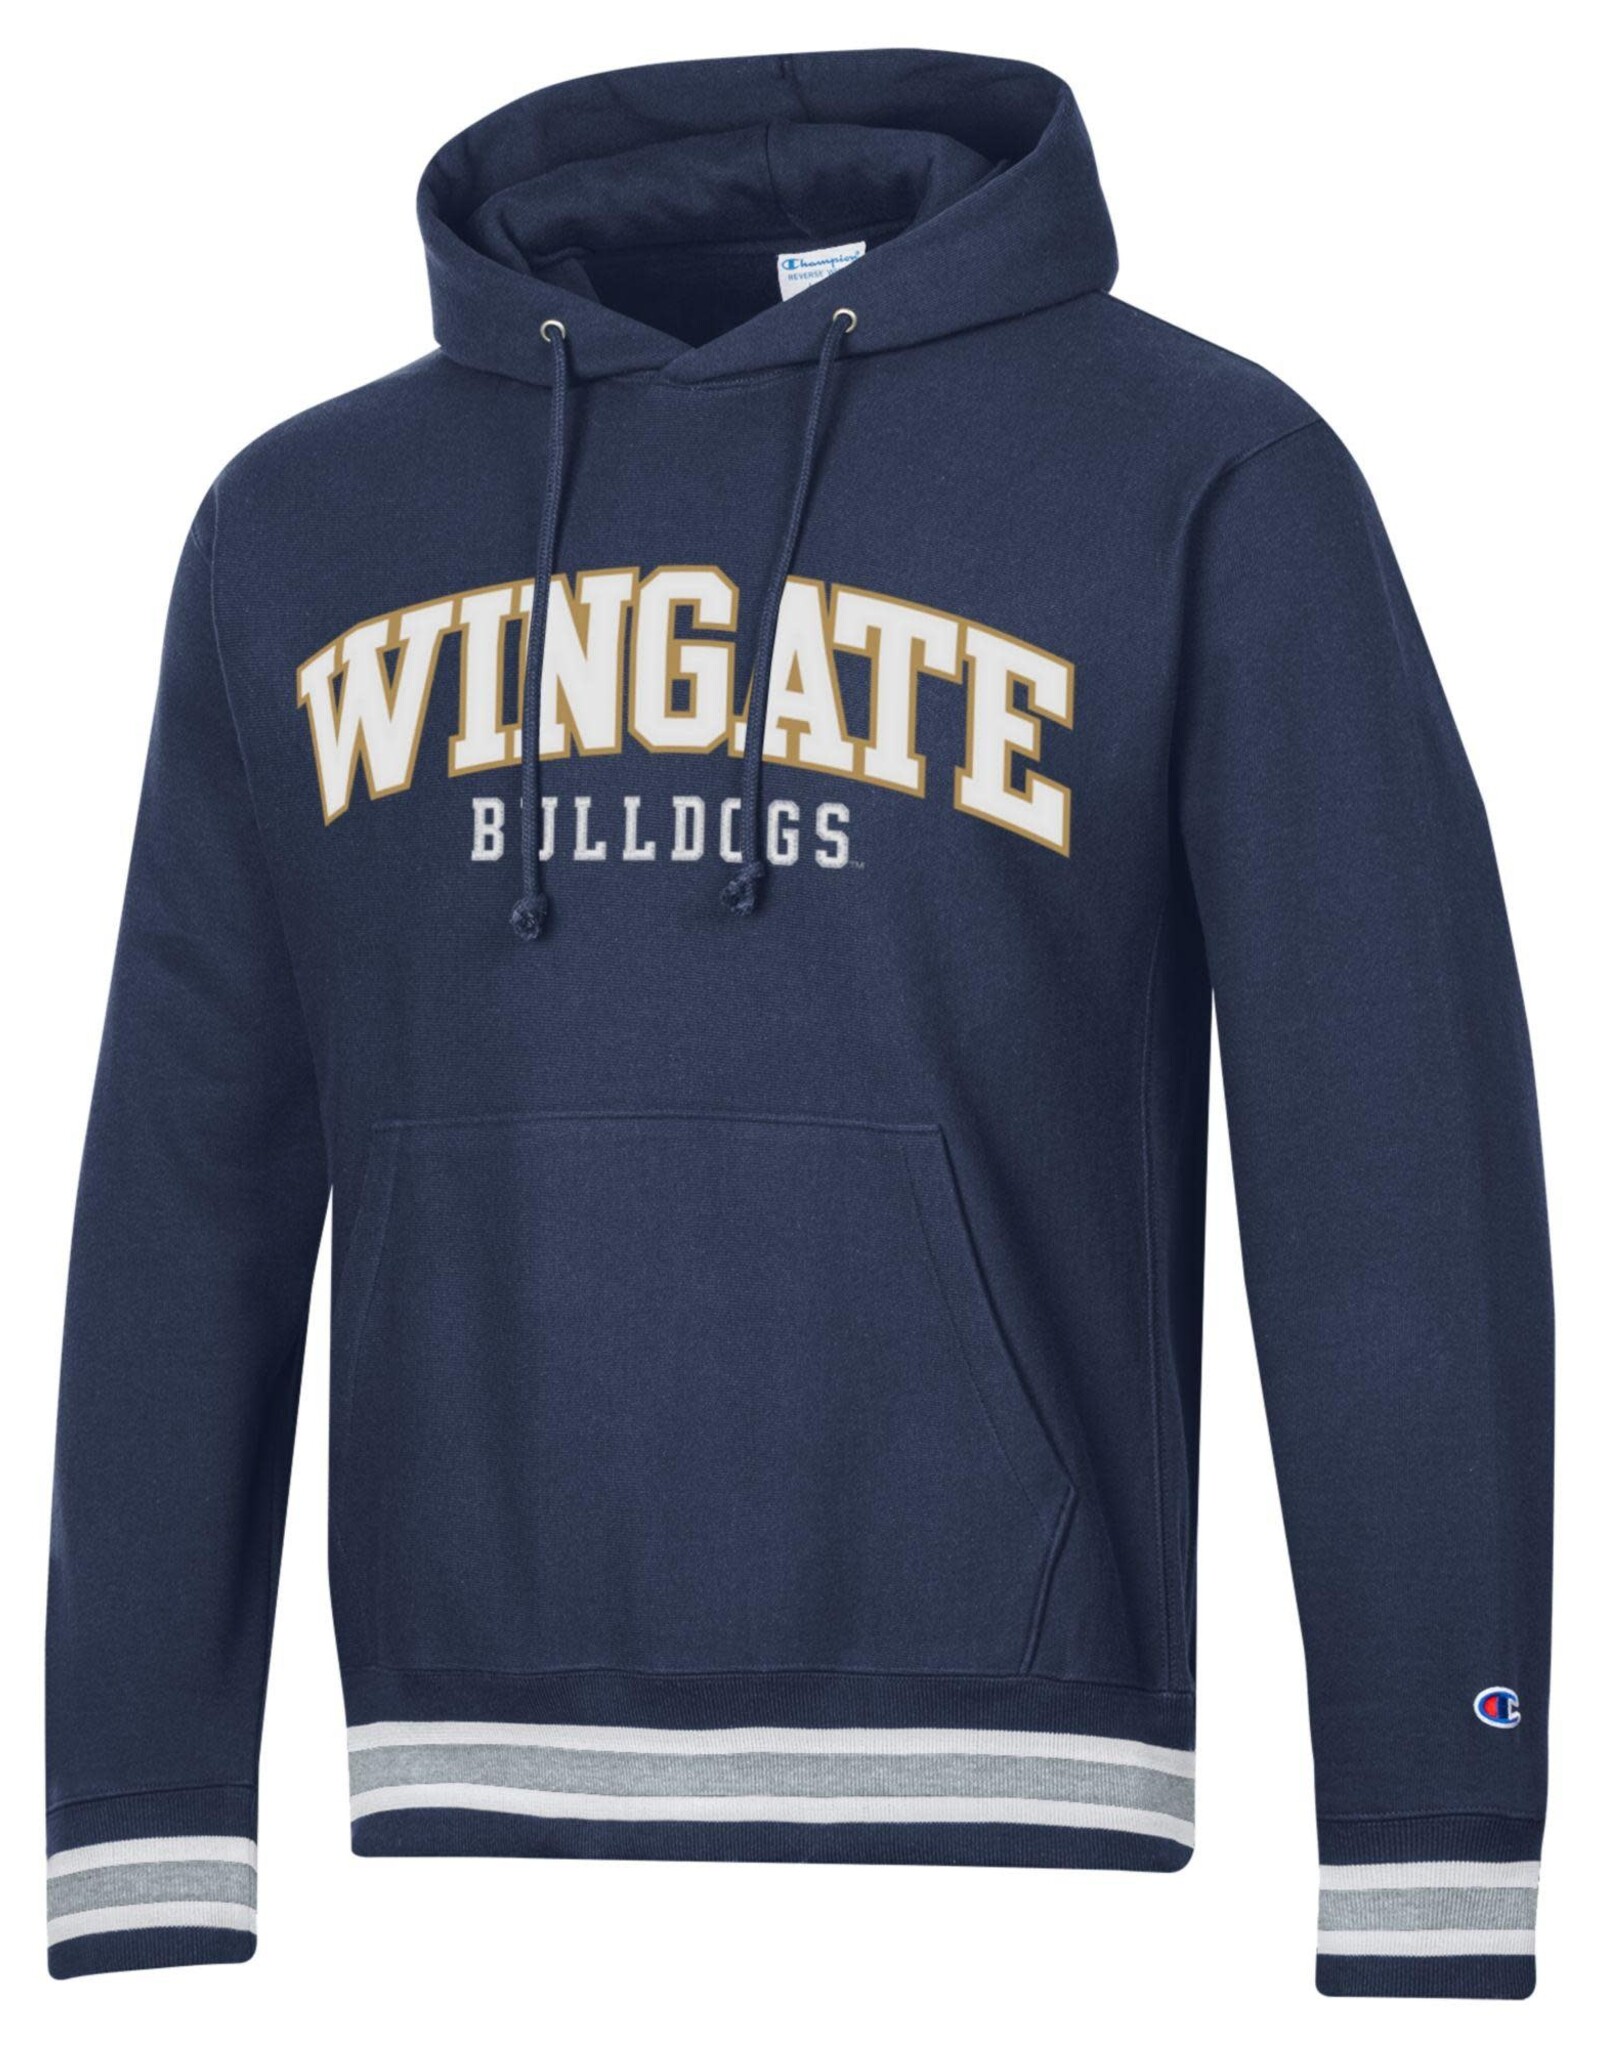 Champion Wingate Bulldogs Embroidered Higher Ed Hoodie Sweatshirt